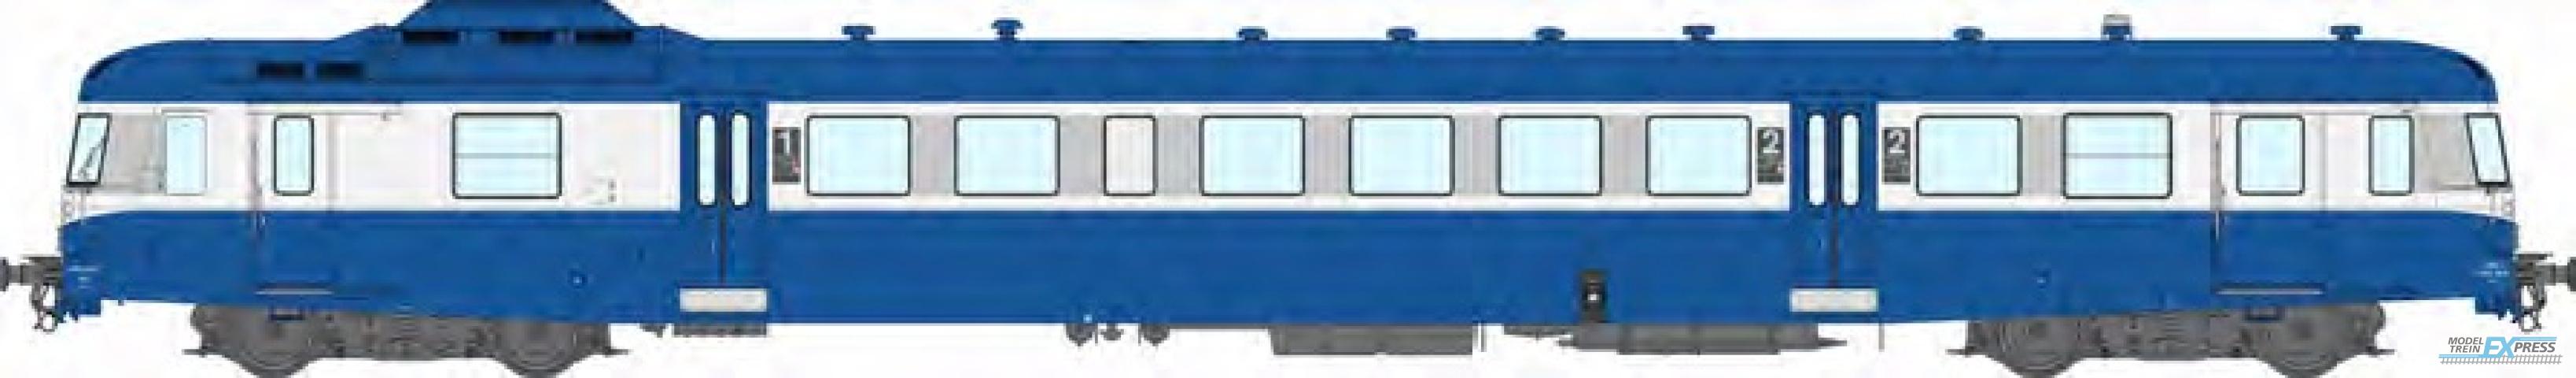 REE models MB-164S X 2805 modernized, Blue, spagetti logo, LIMOGES, SNCF Era V-VI - DCC SOUND